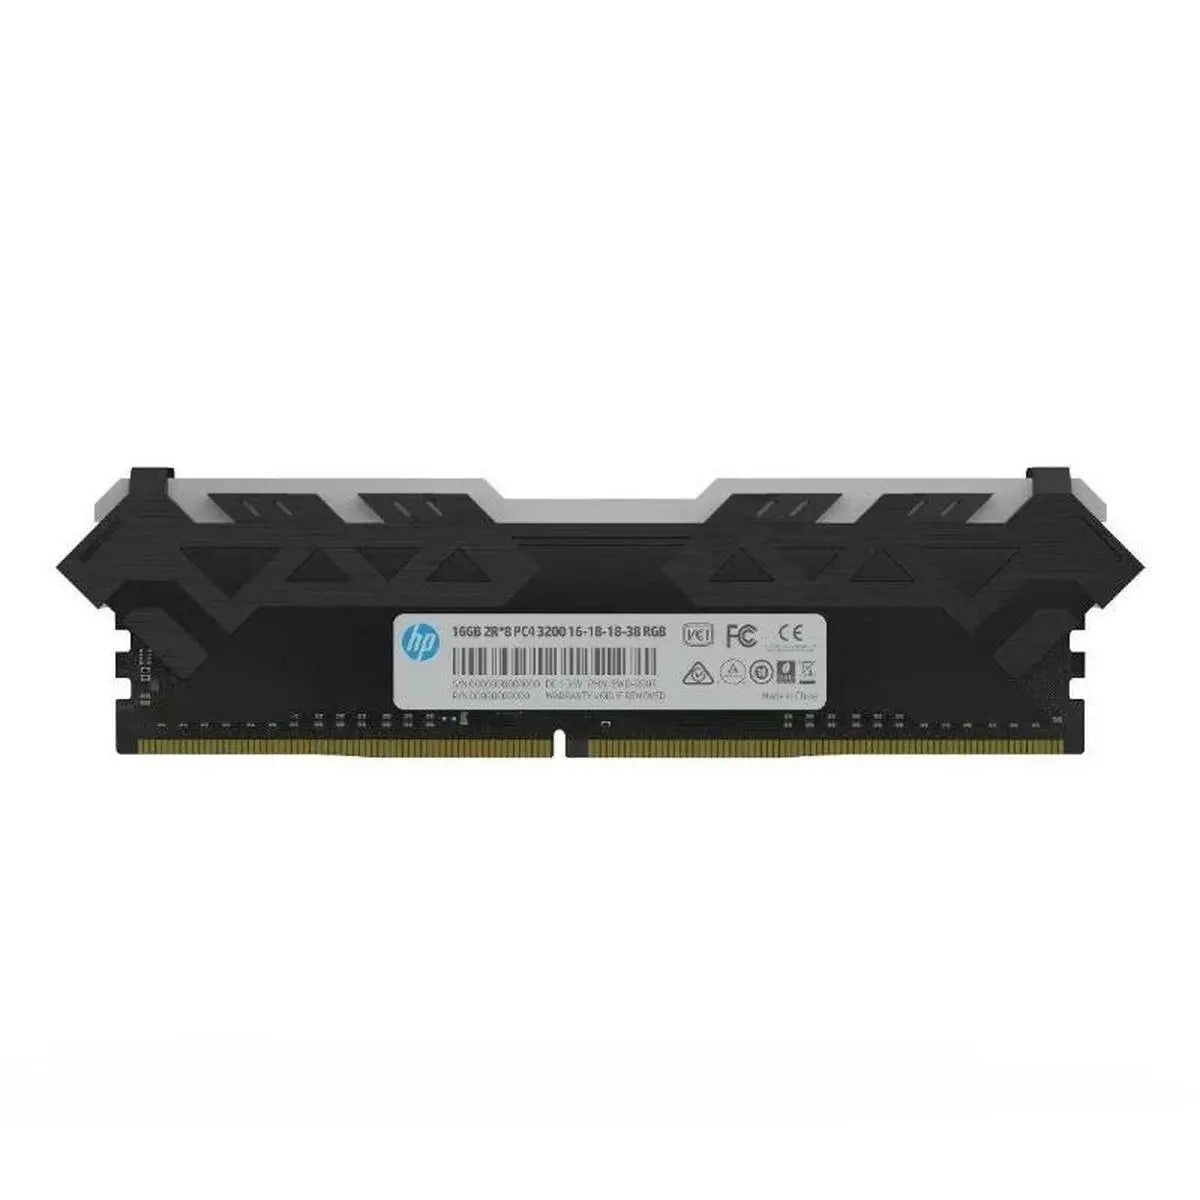 RAM Memory HP V8  16 GB CL16 - IGSI Europe Ltd